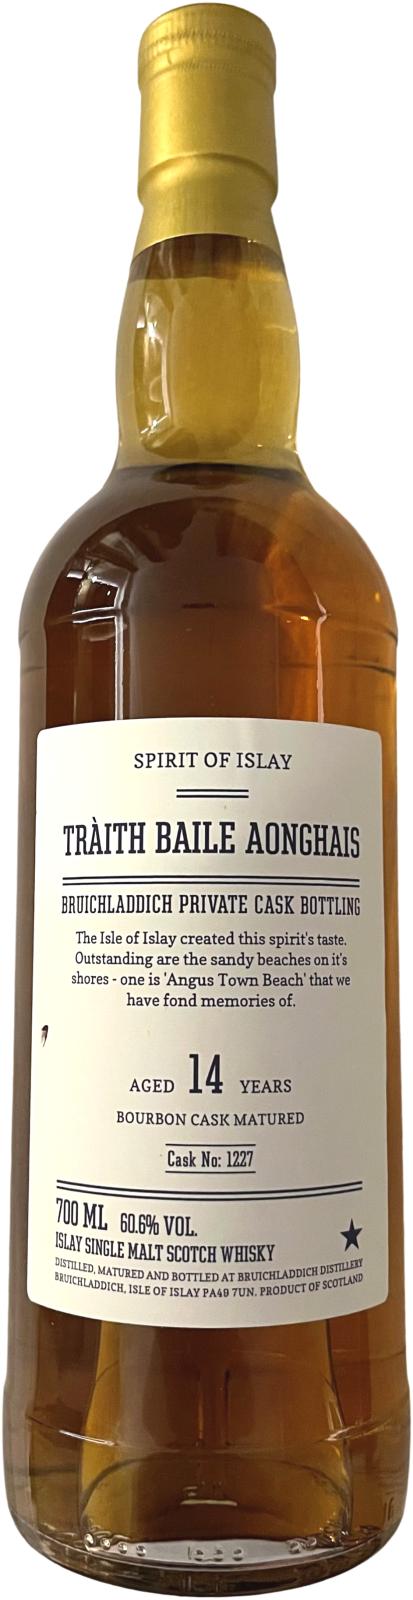 Bruichladdich 14yo Bourbon Cask #1227 Traith Baile Aonghais 60.6% 700ml